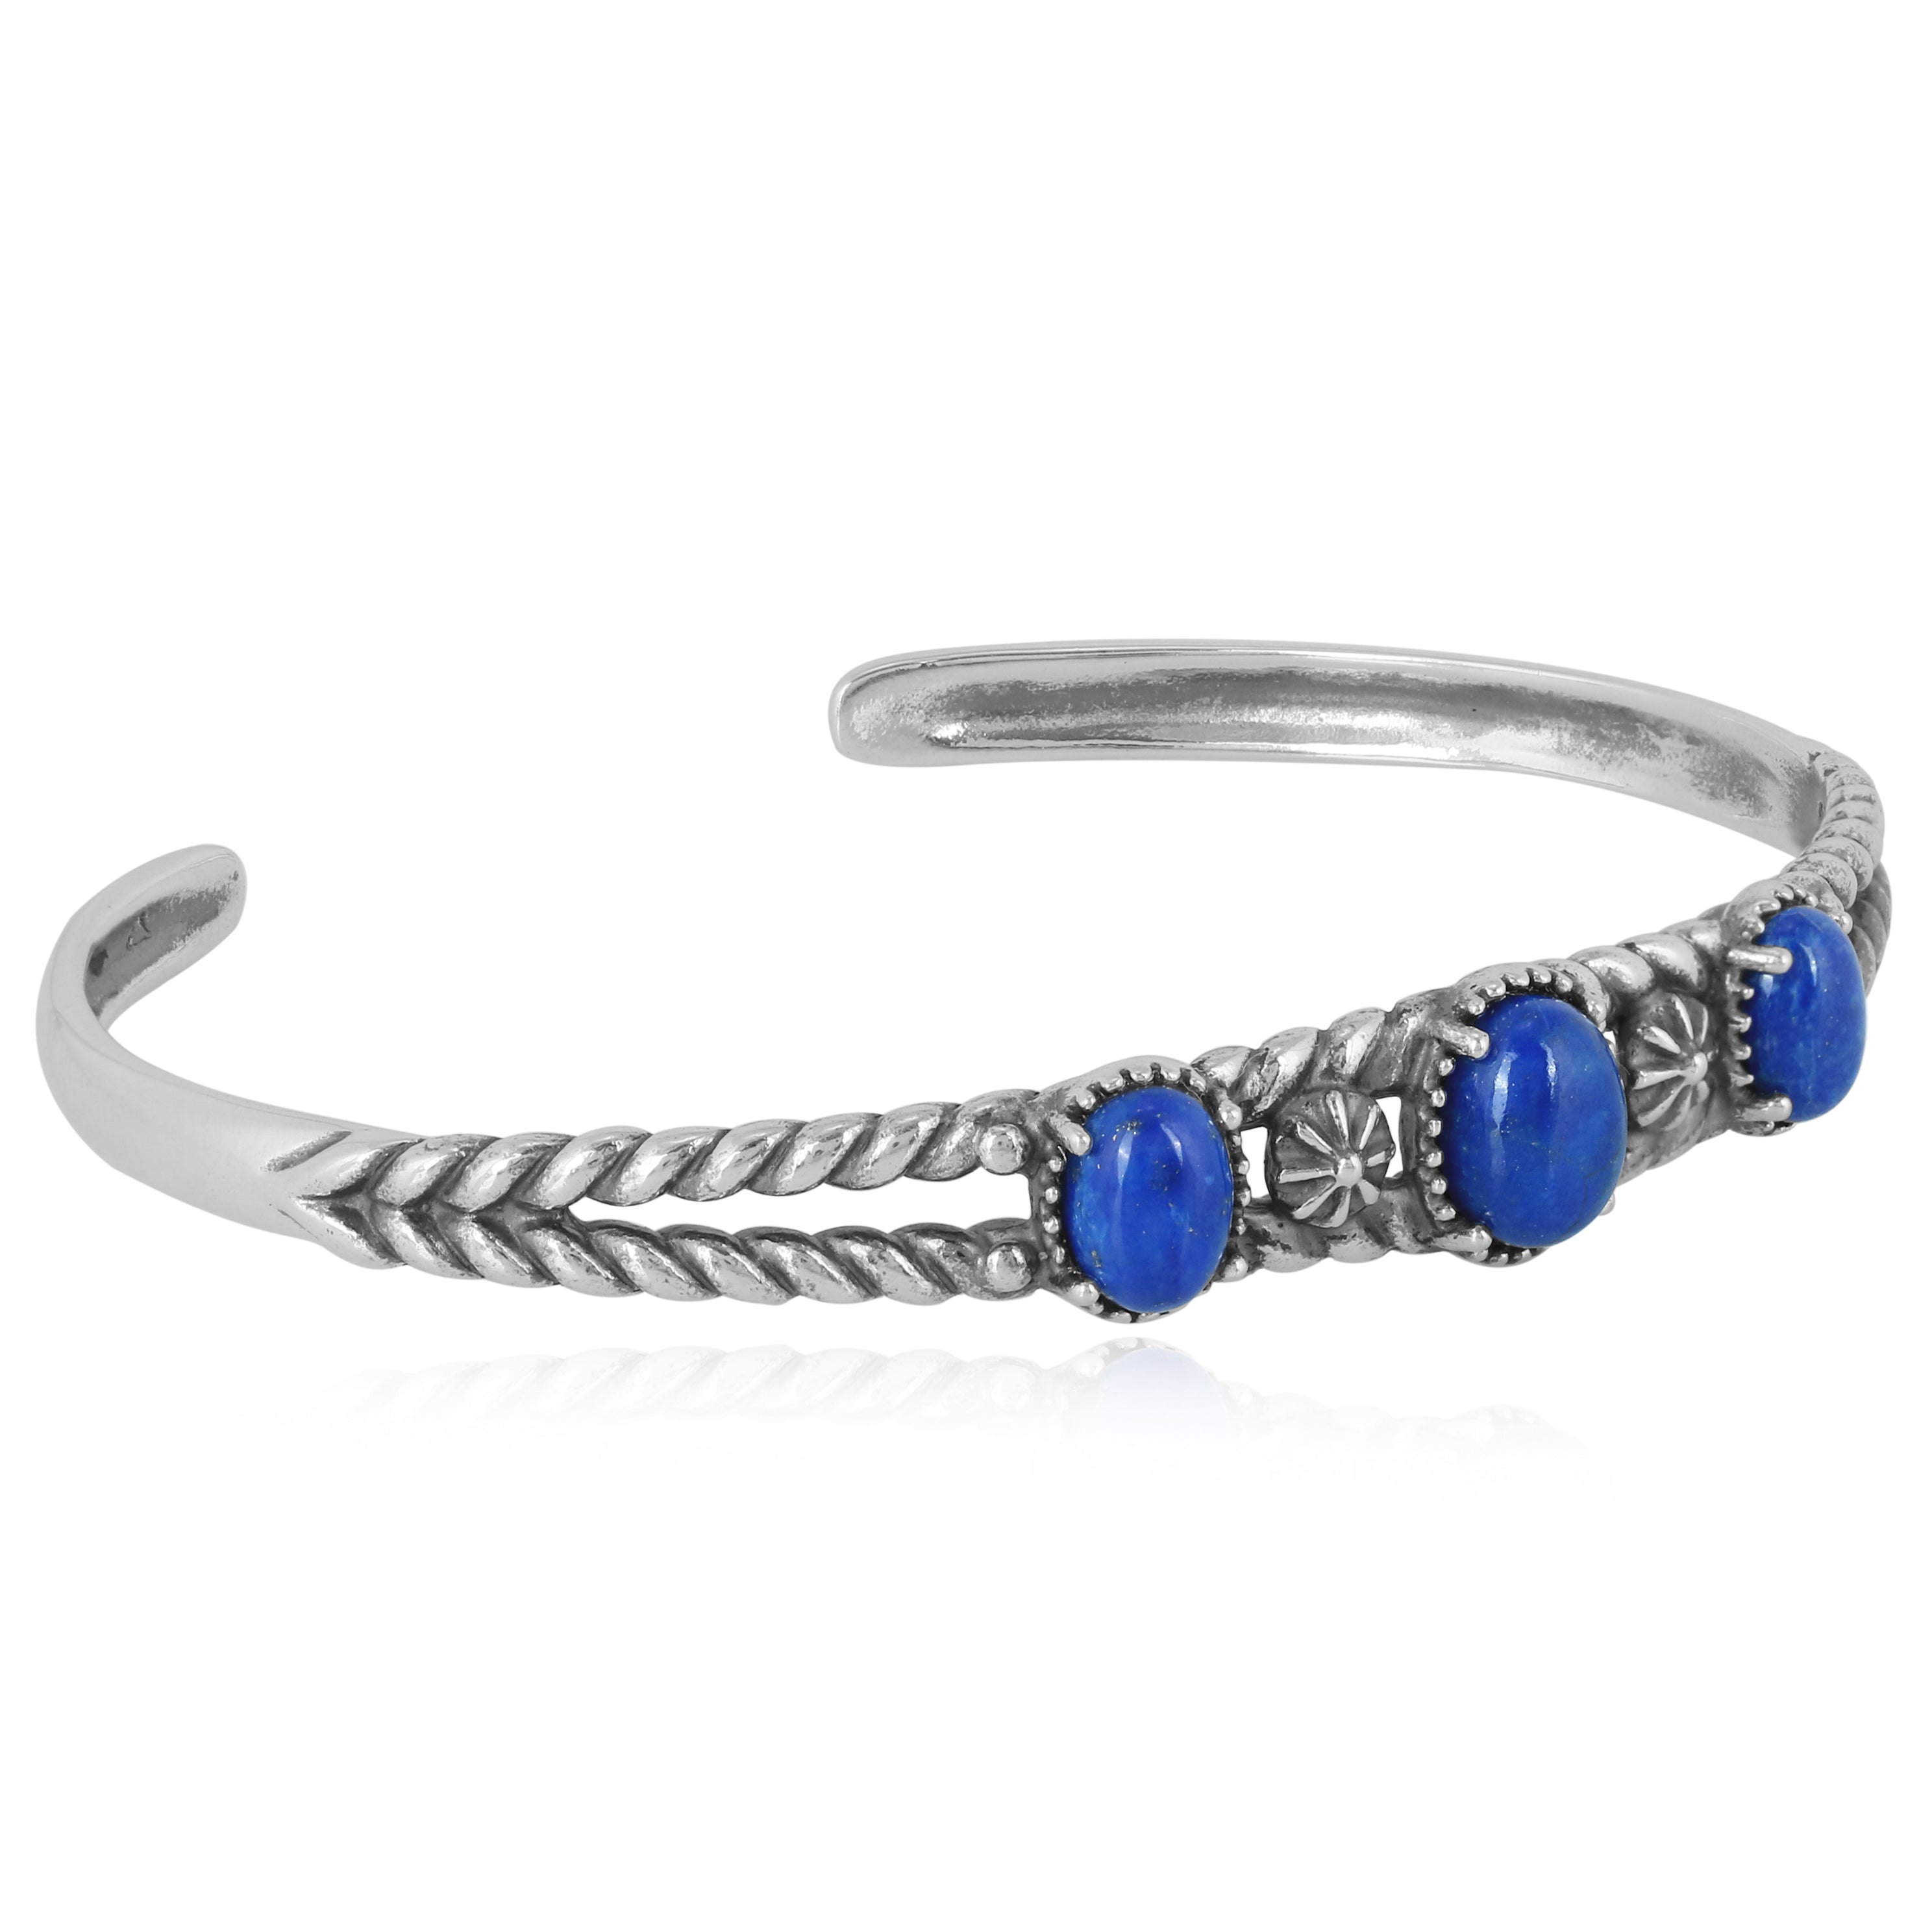 Buy Starto Natural Stone Bracelet Jasper 3 Row Beads Wrap Wrist Statement  Boho Bracelet For Women at Amazon.in